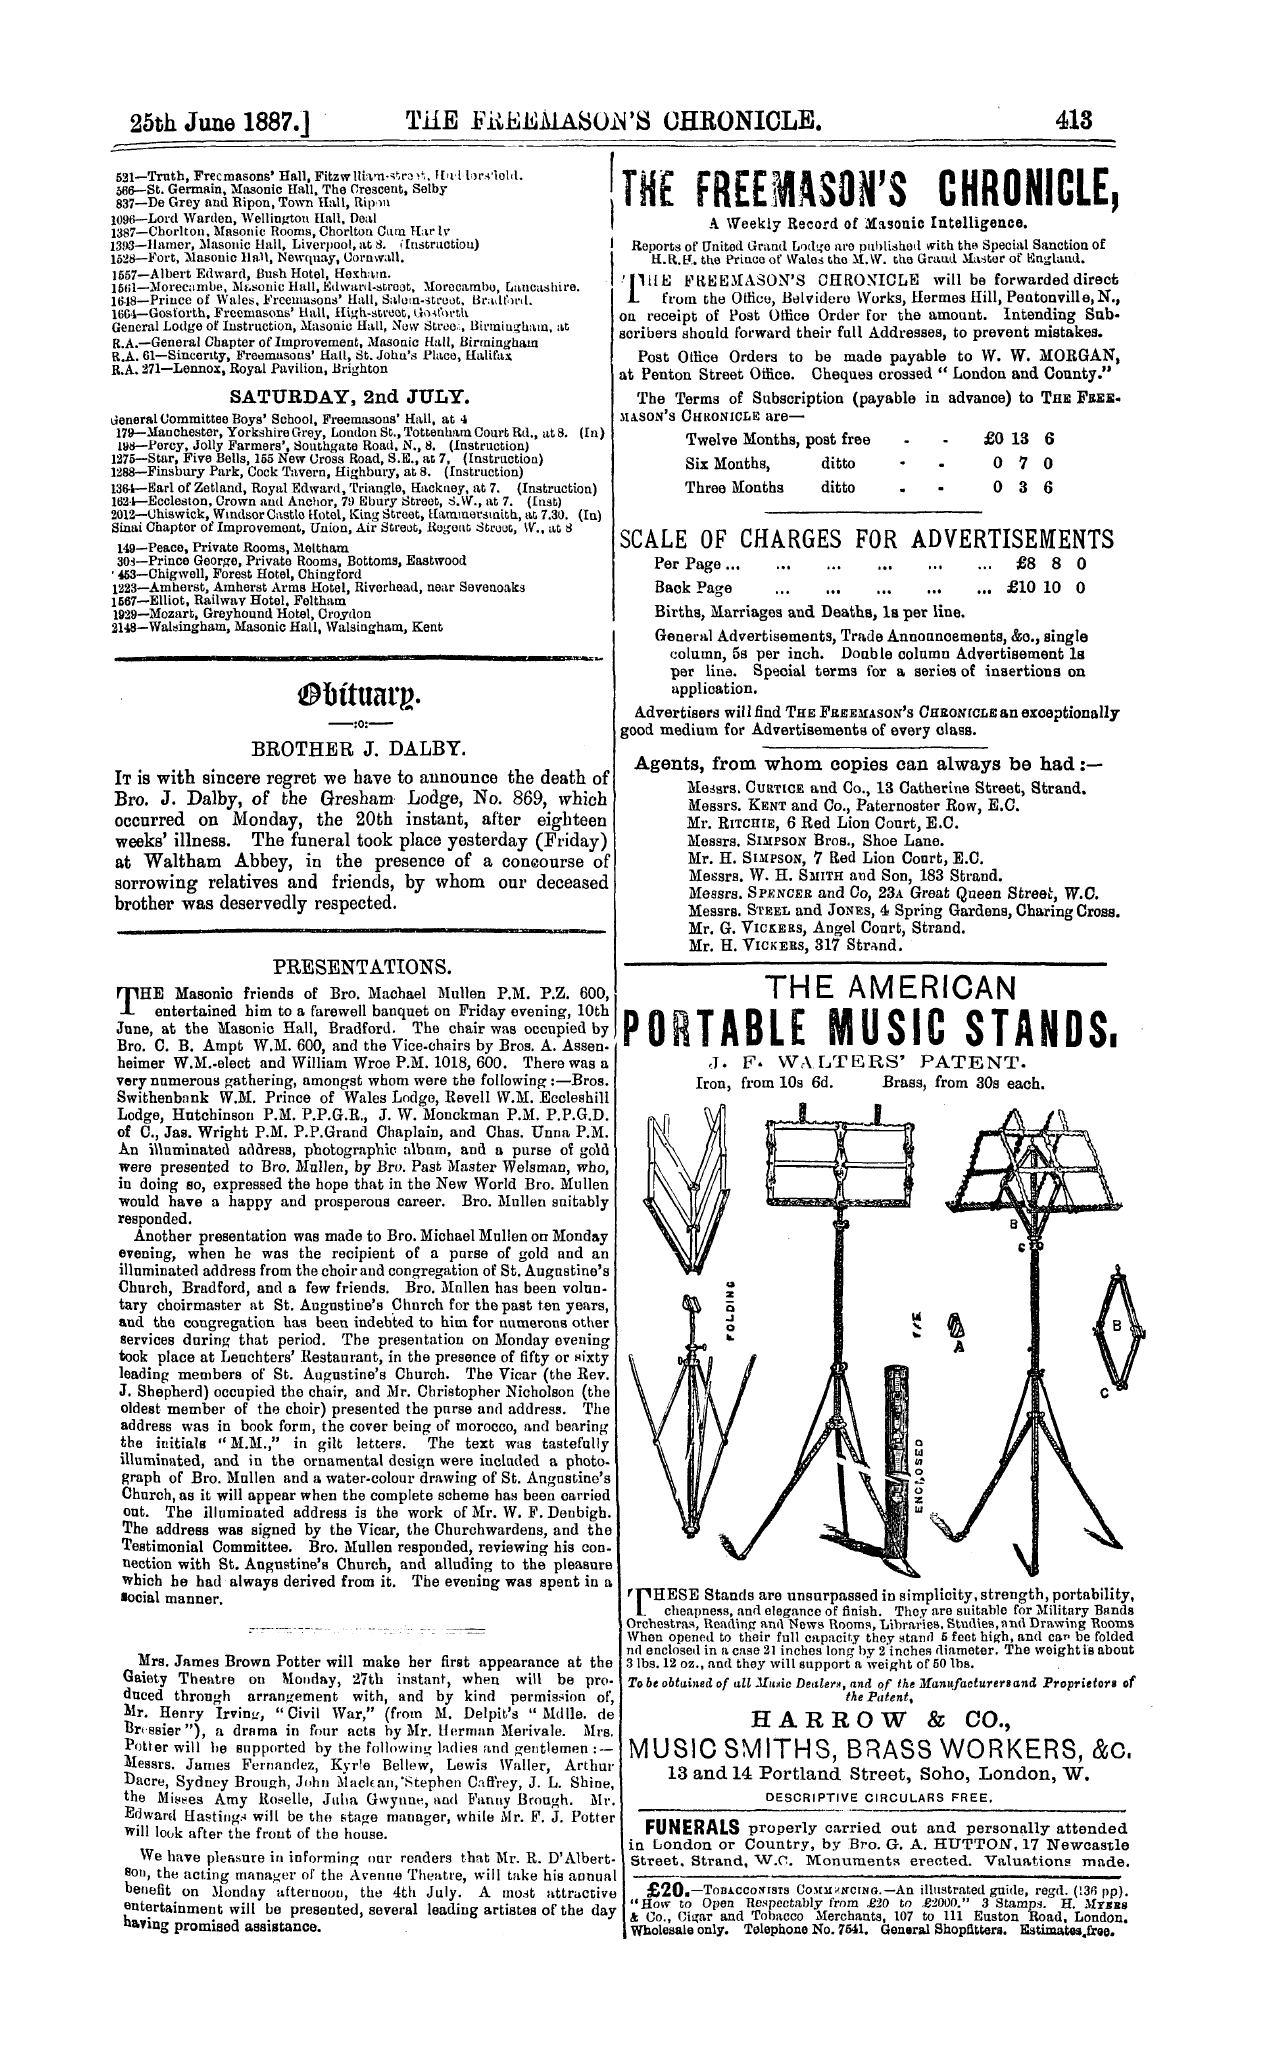 The Freemason's Chronicle: 1887-06-25 - Presentations.